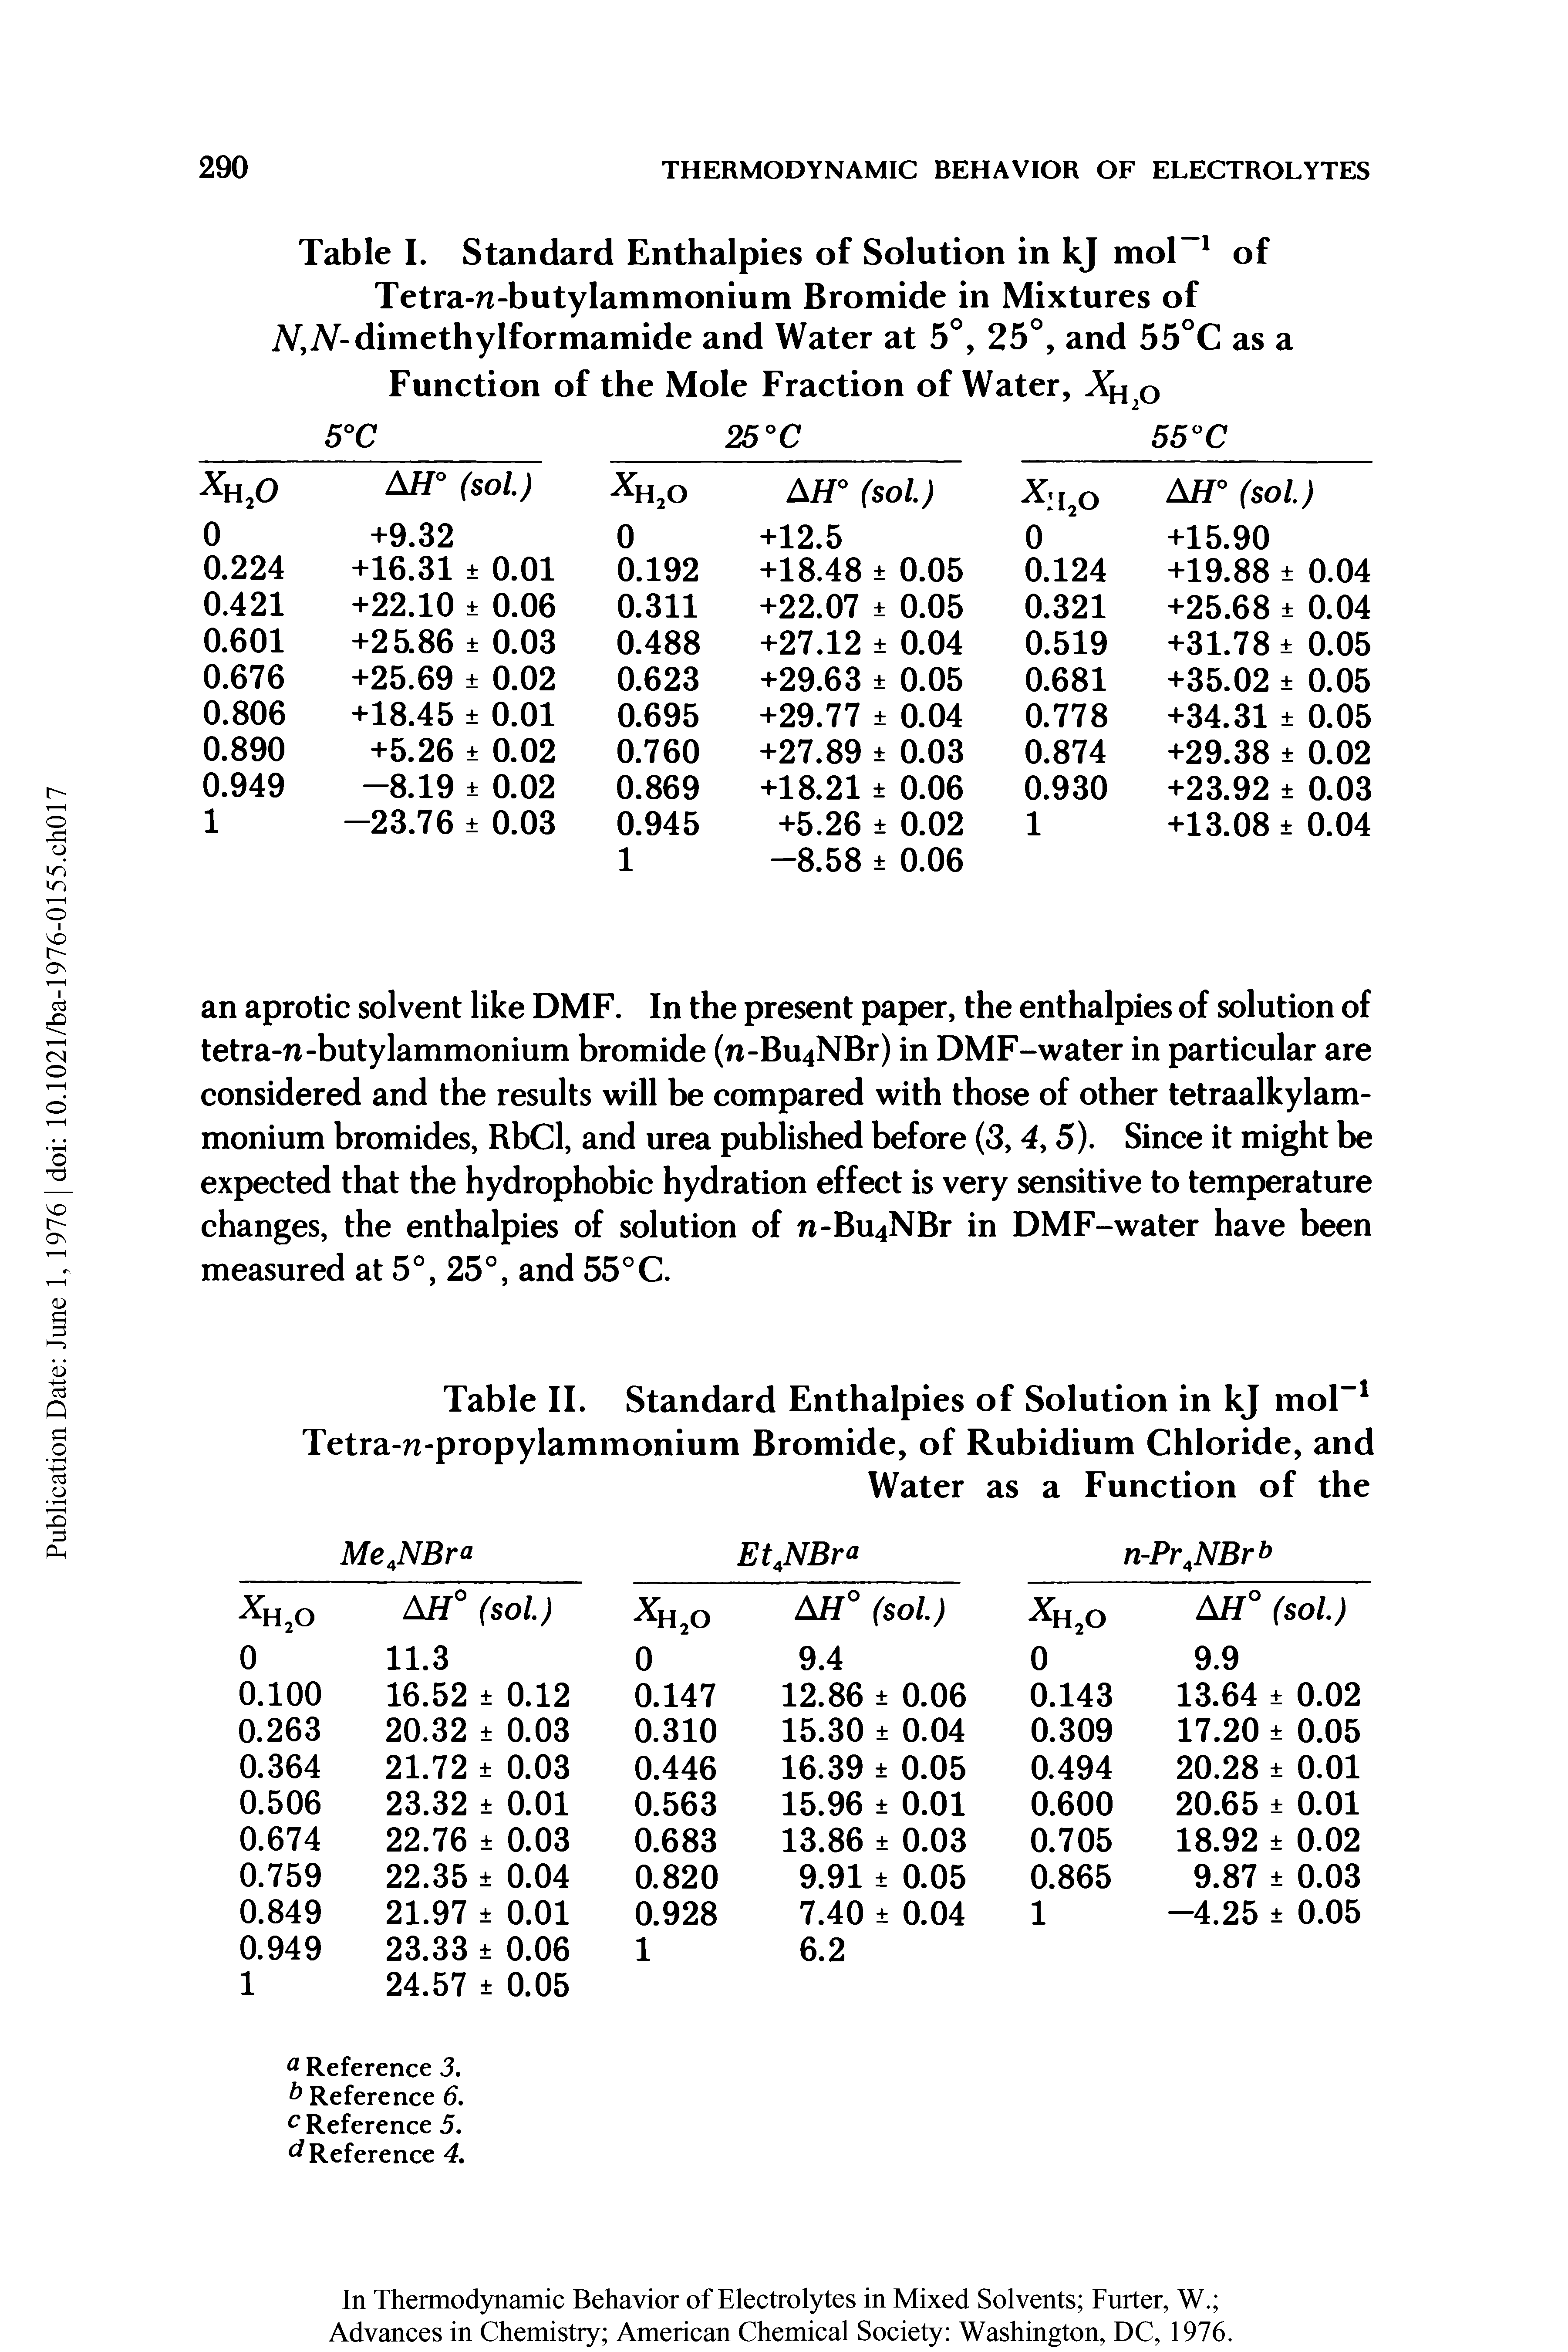 Table II. Standard Enthalpies of Solution in kj mol-1 Tetra-n-propylammonium Bromide, of Rubidium Chloride, and...